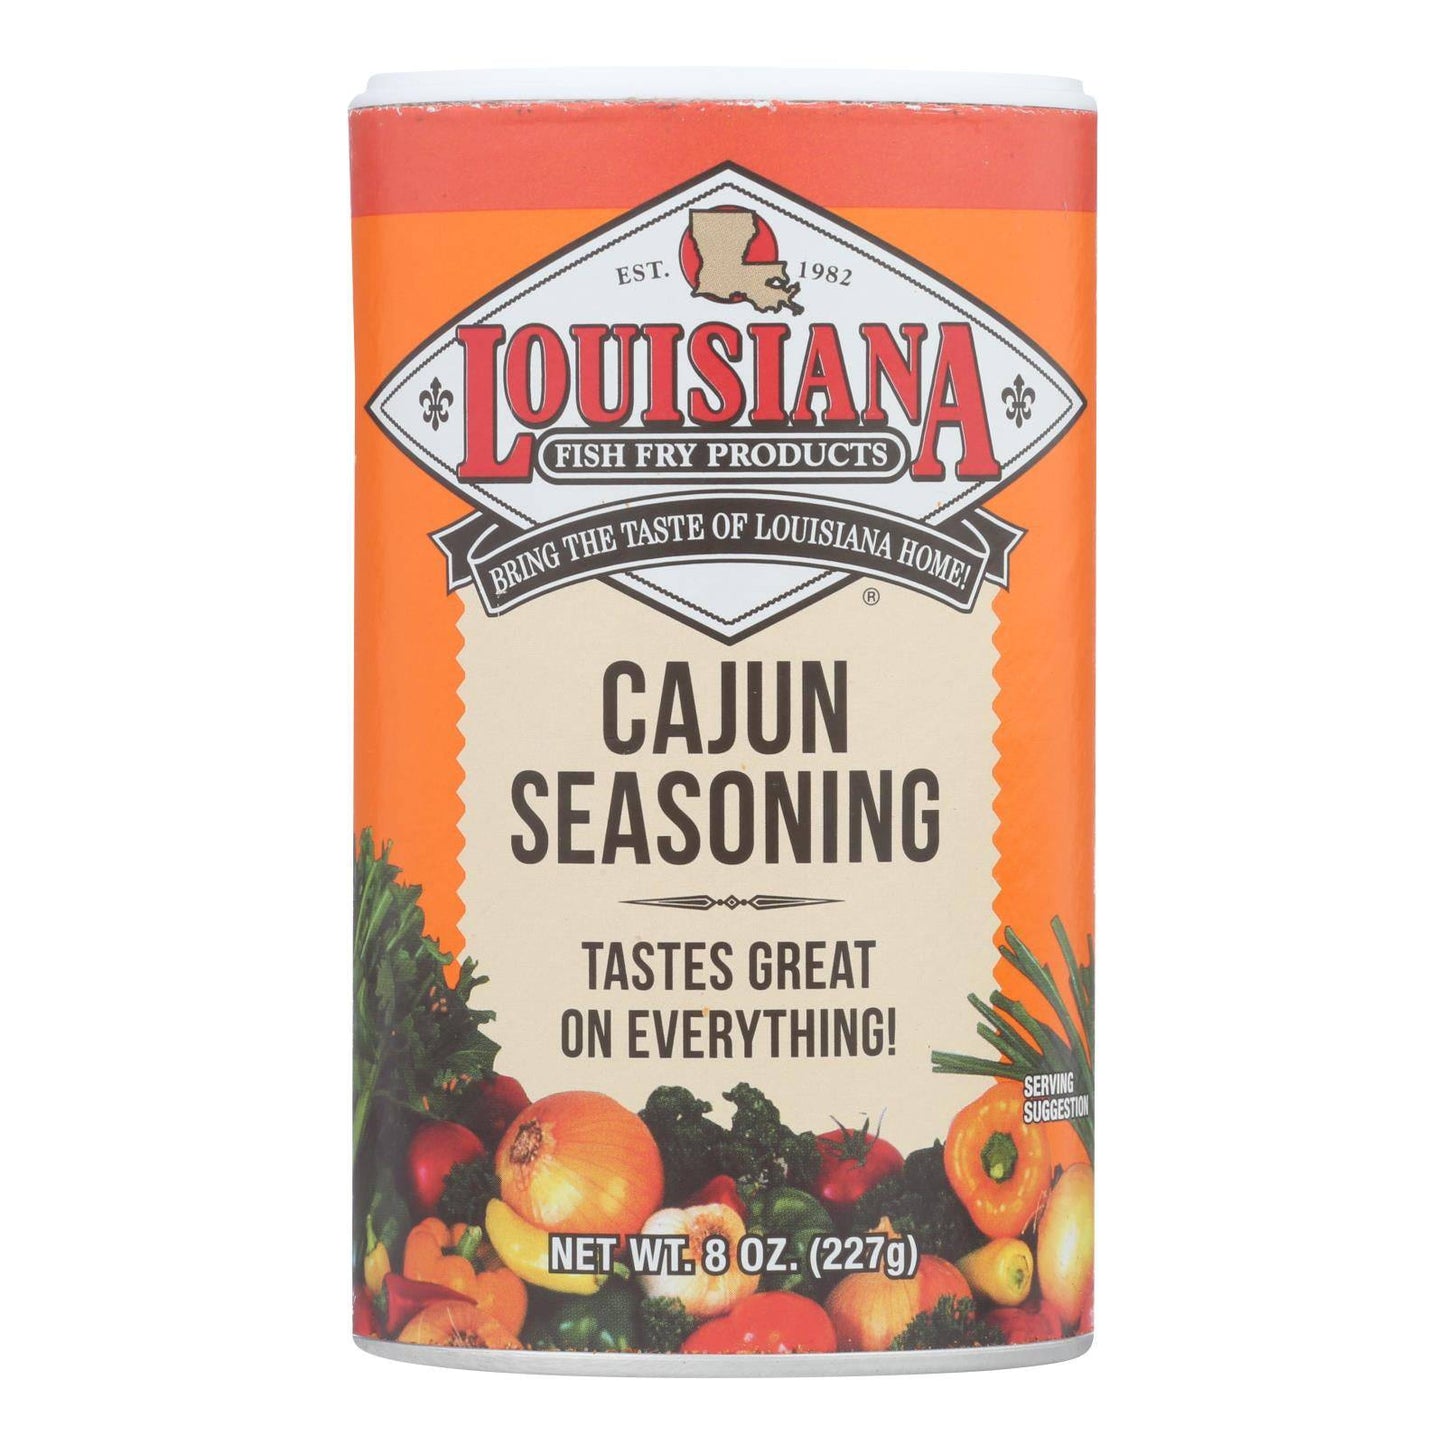 Buy La Fish Fry Seasoning - Cajun - Case Of 12 - 8 Oz  at OnlyNaturals.us